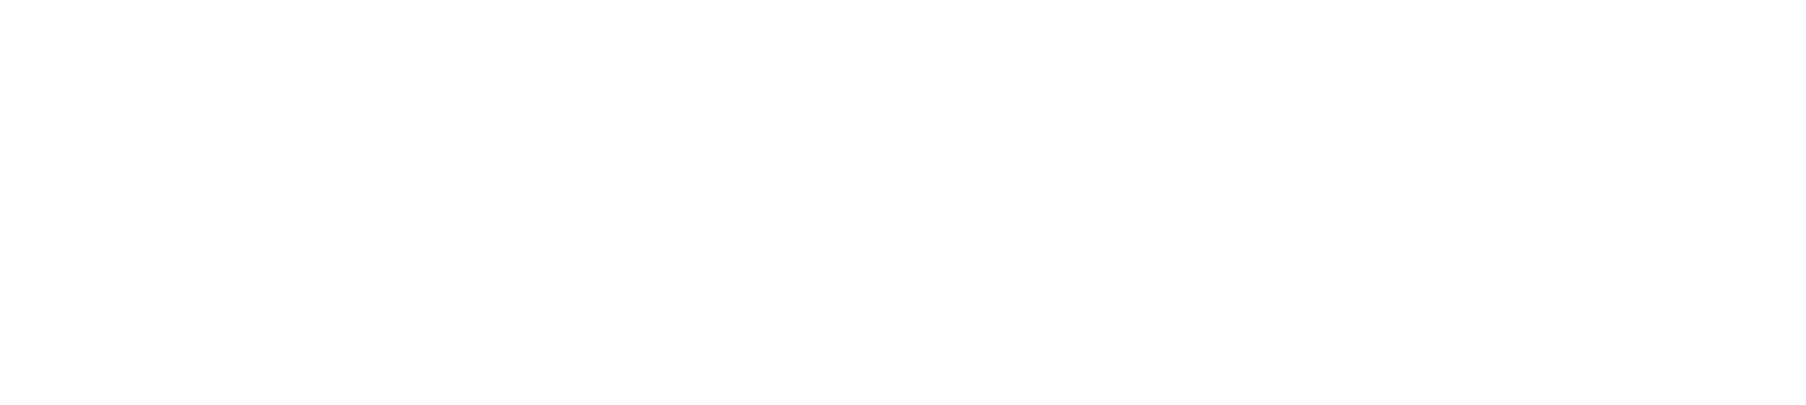 isi - independent school inspectorate logo